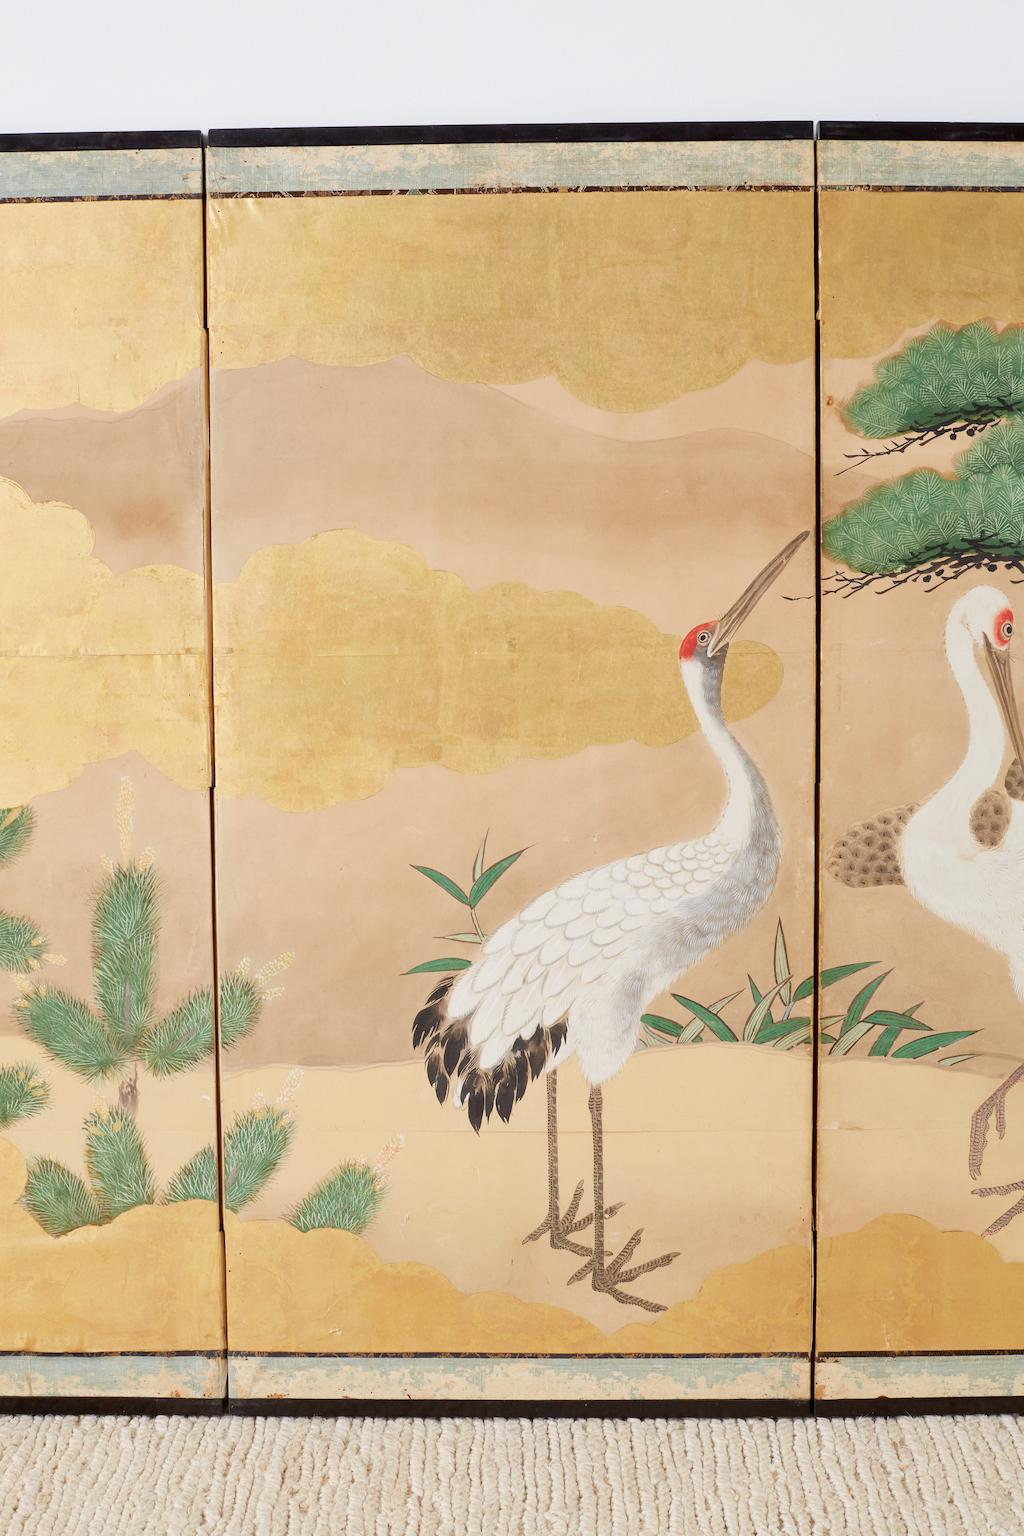 Etched Japanese Six-Panel Kano School Crane Landscape Screen